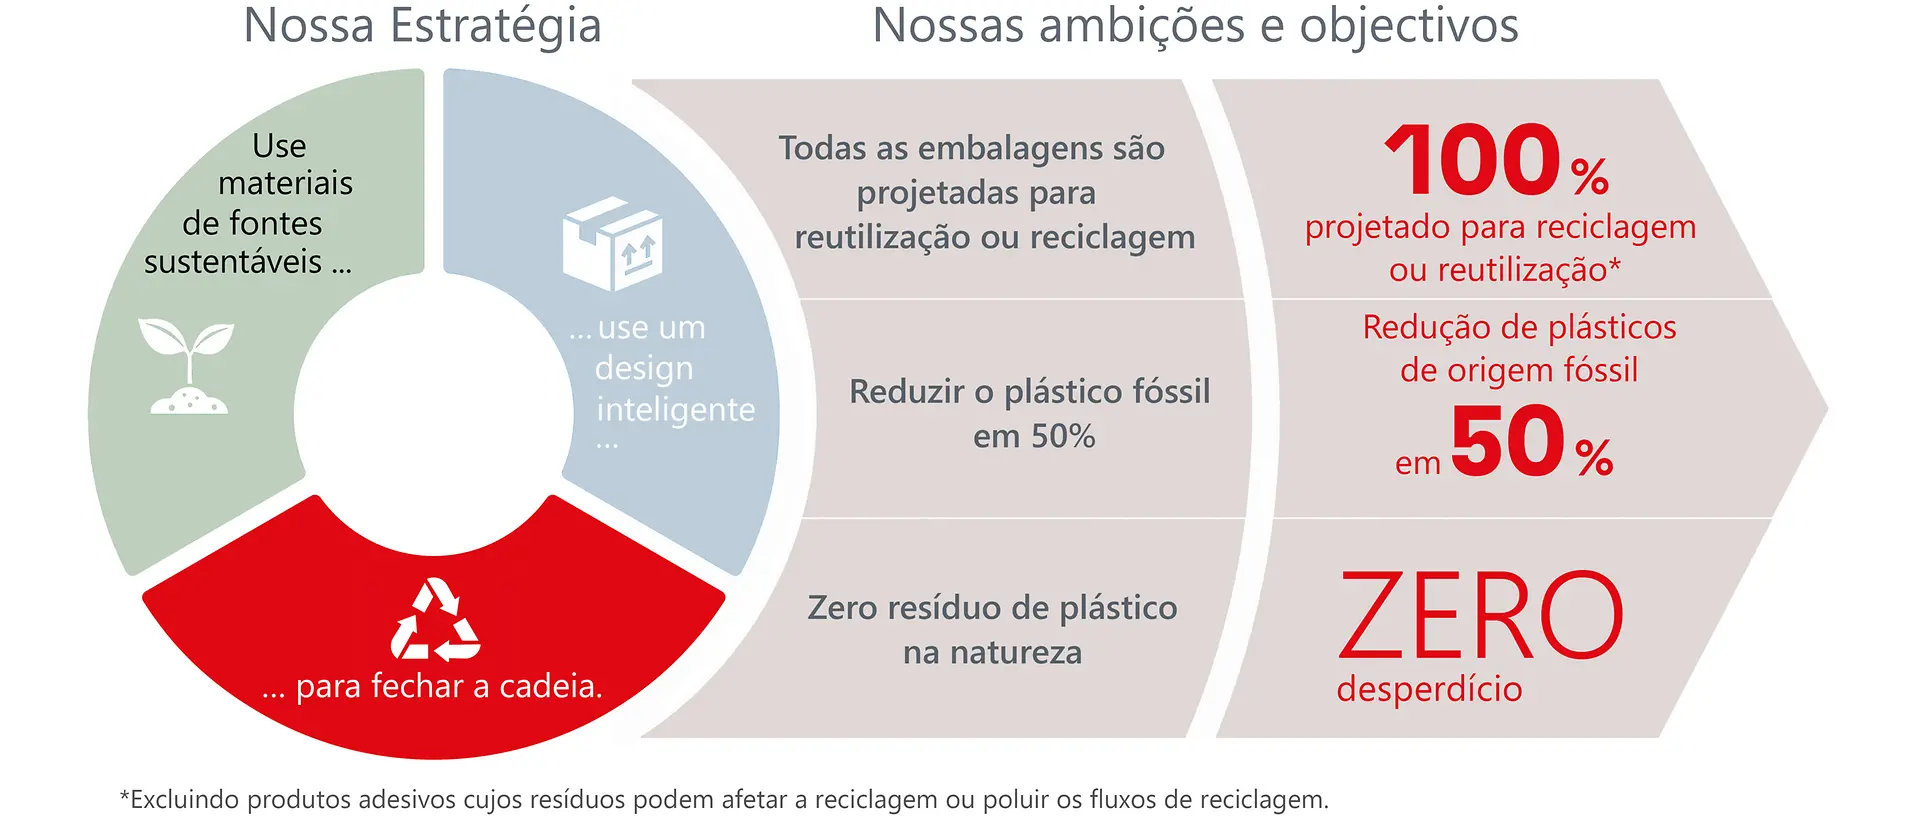 sustainability-packaging-strategy-estrategia-embalagens-sustentaveis-pt